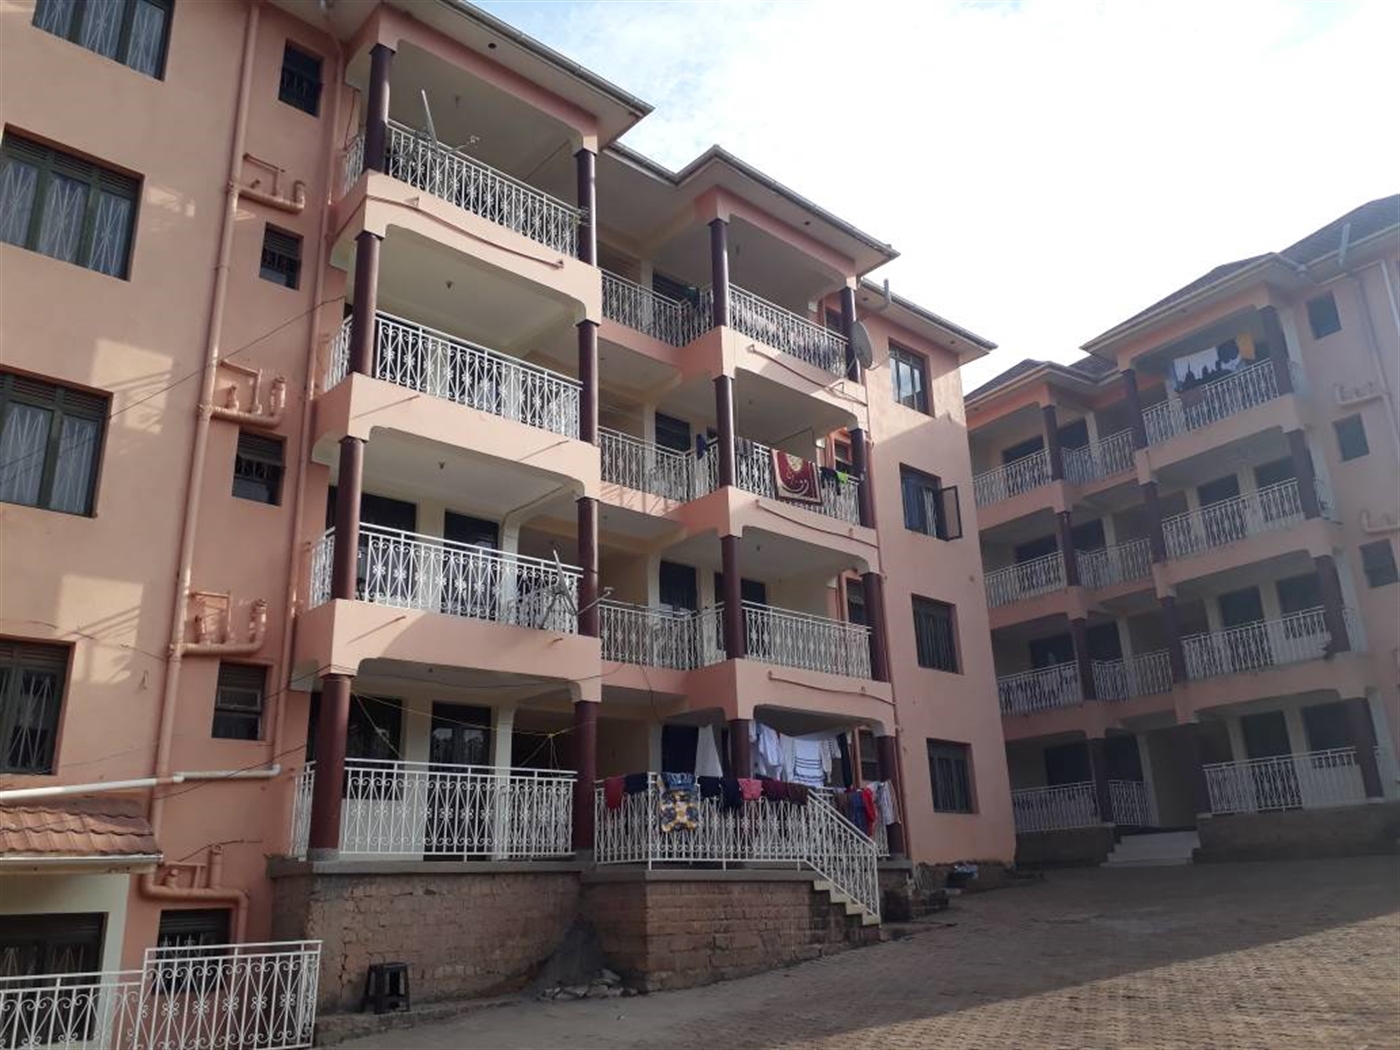 Apartment block for sale in Lukuli Kampala